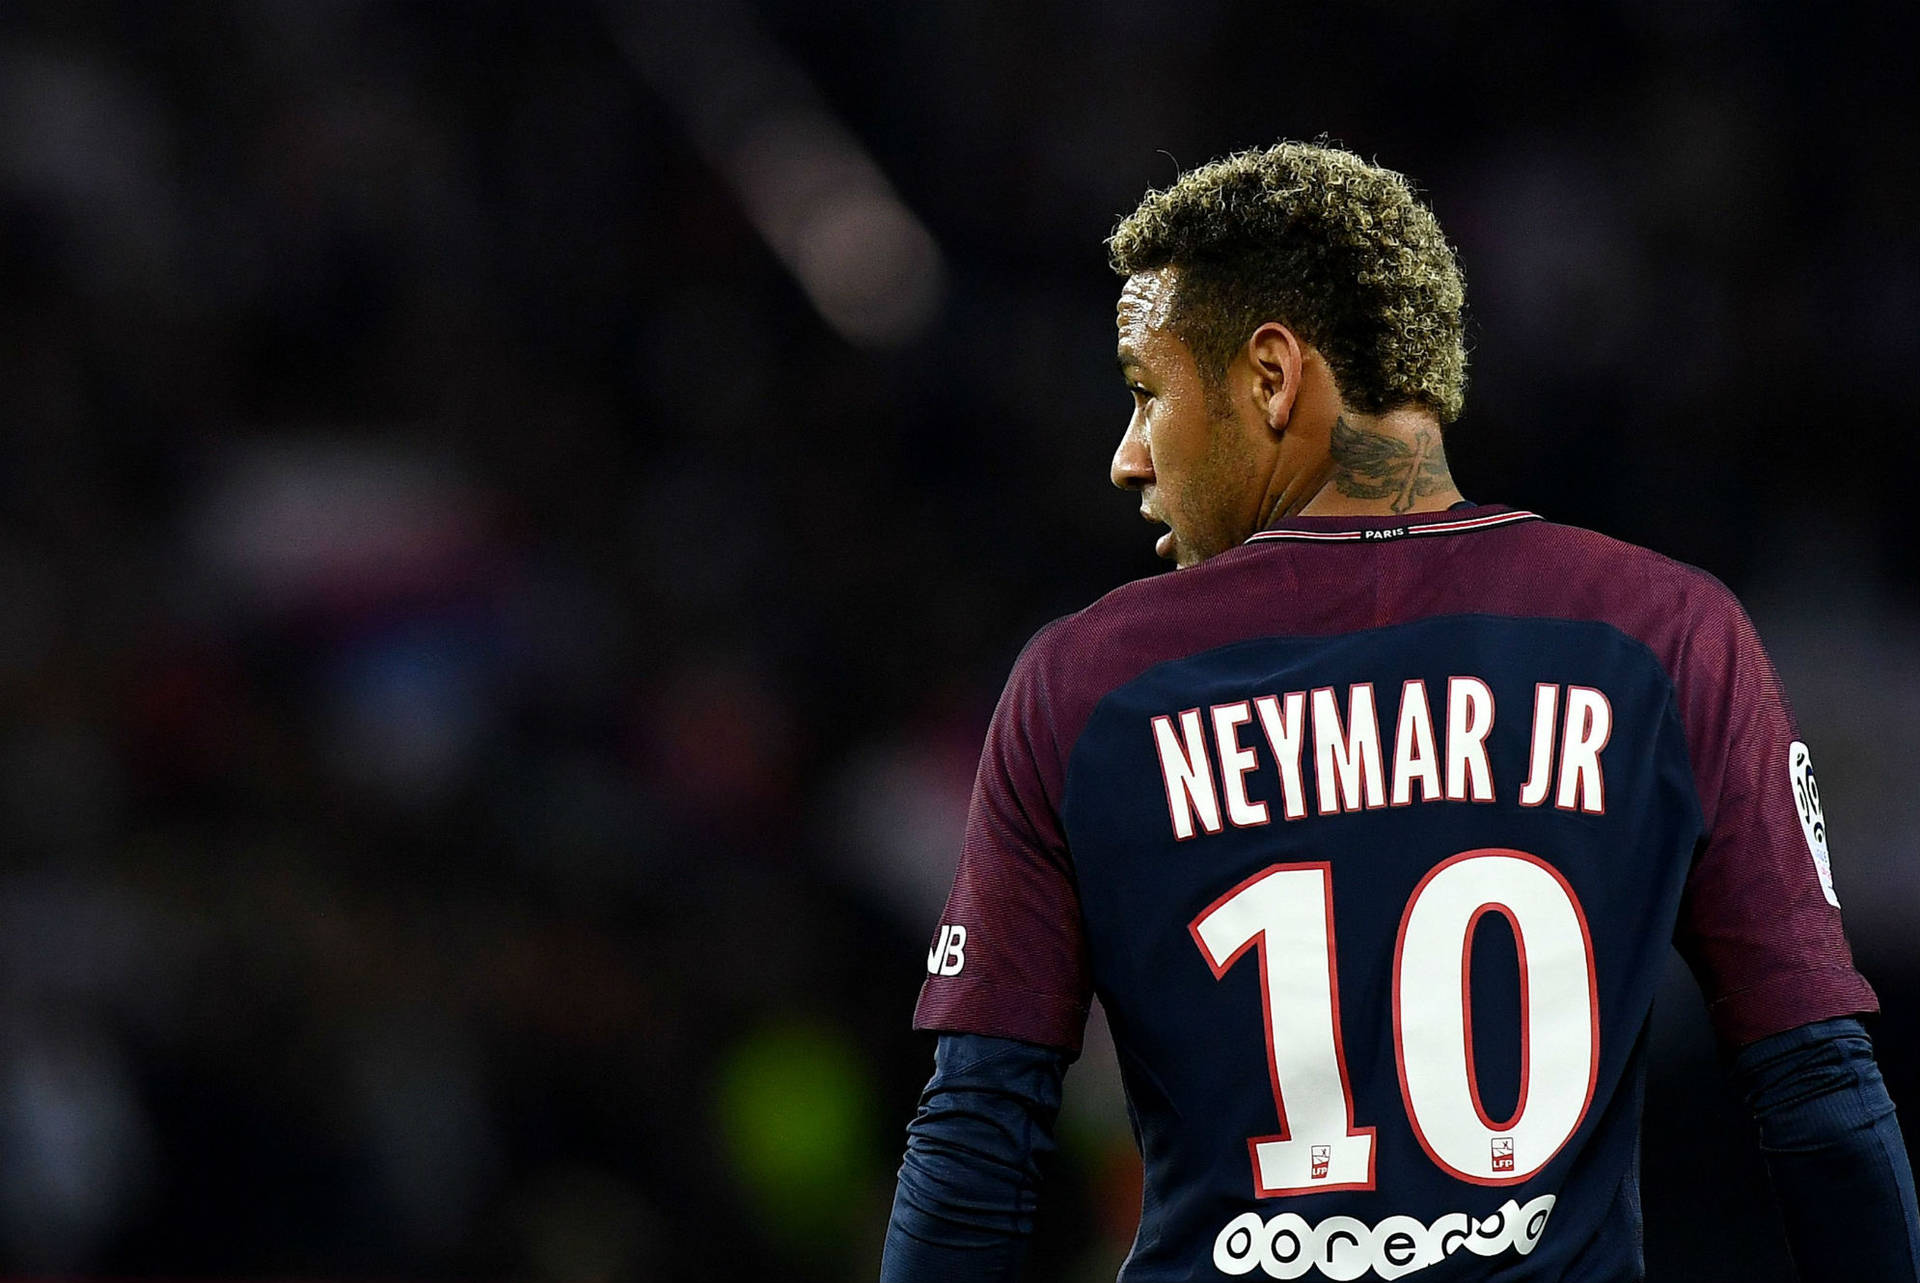 Neymar Jr Number 10 Jersey Wallpaper